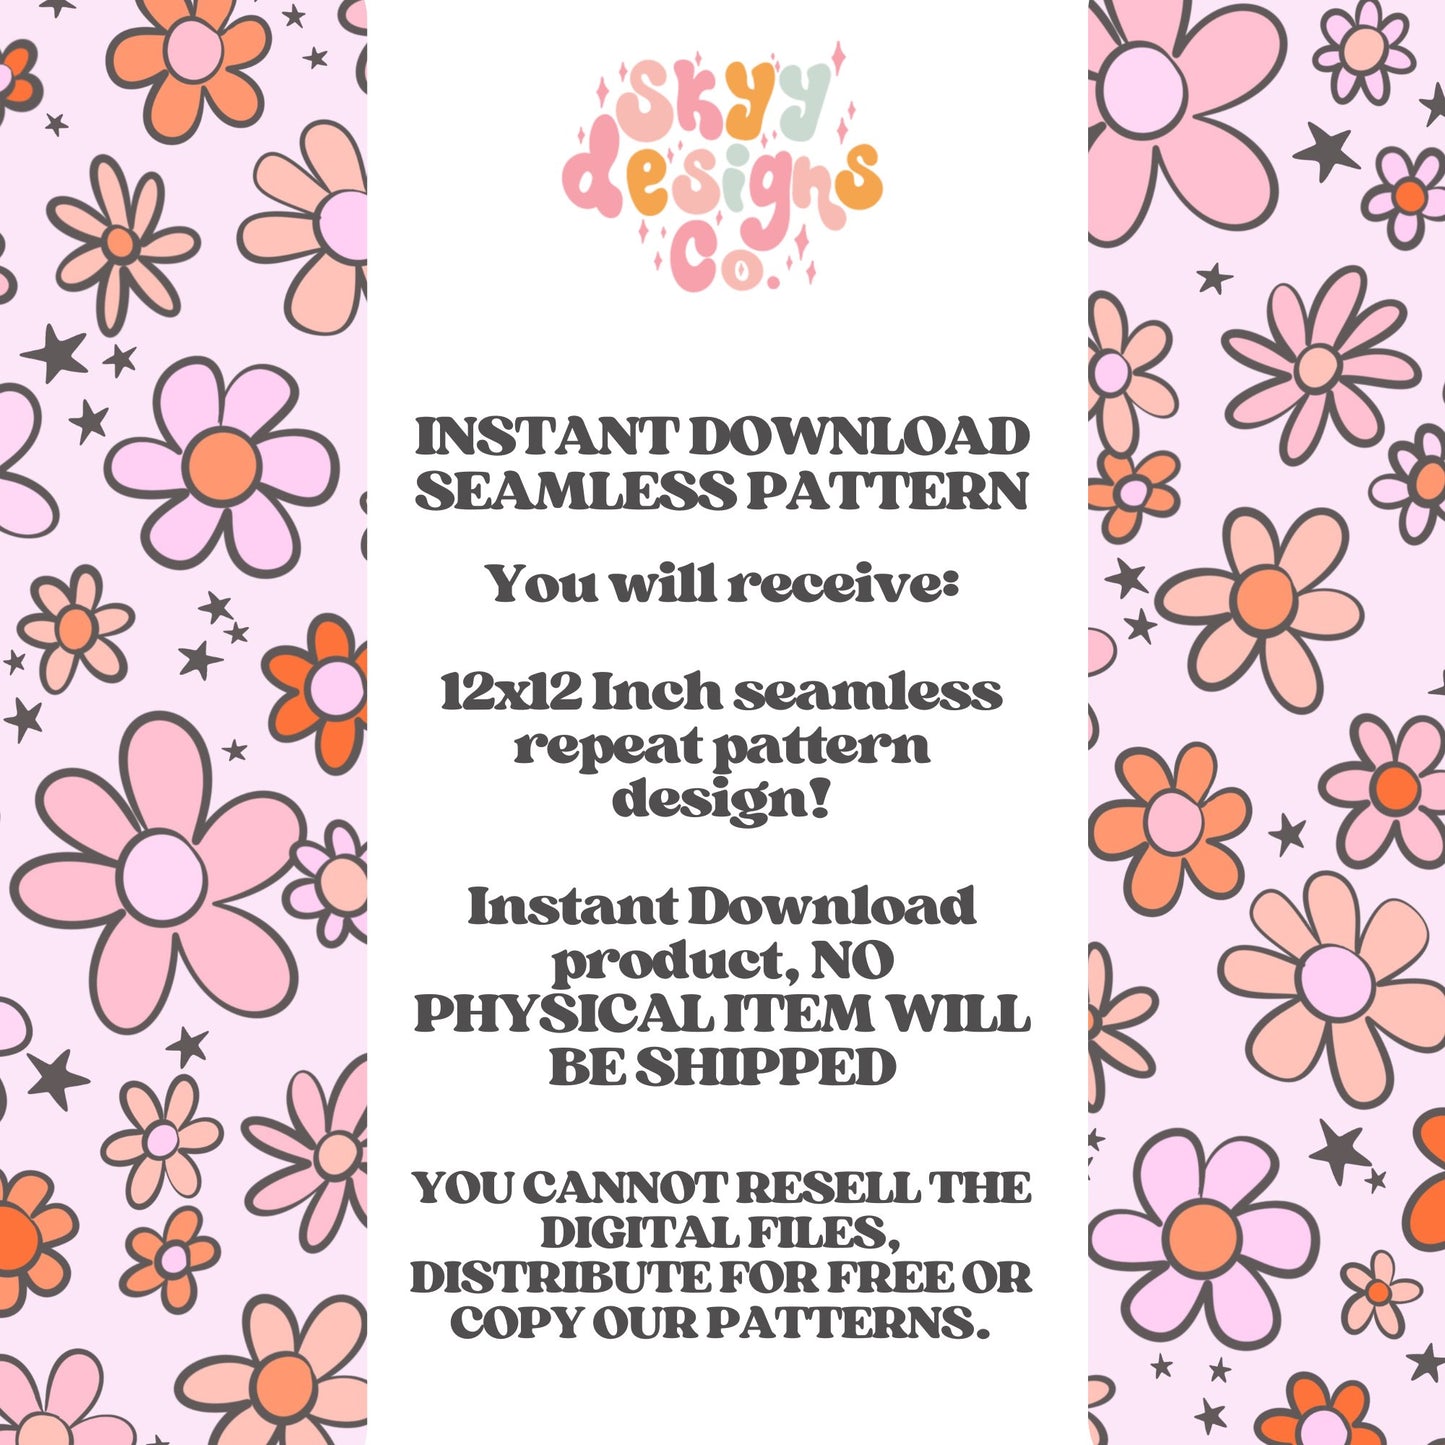 Boho Halloween floral seamless surface pattern - SkyyDesignsCo | Seamless Pattern Designs